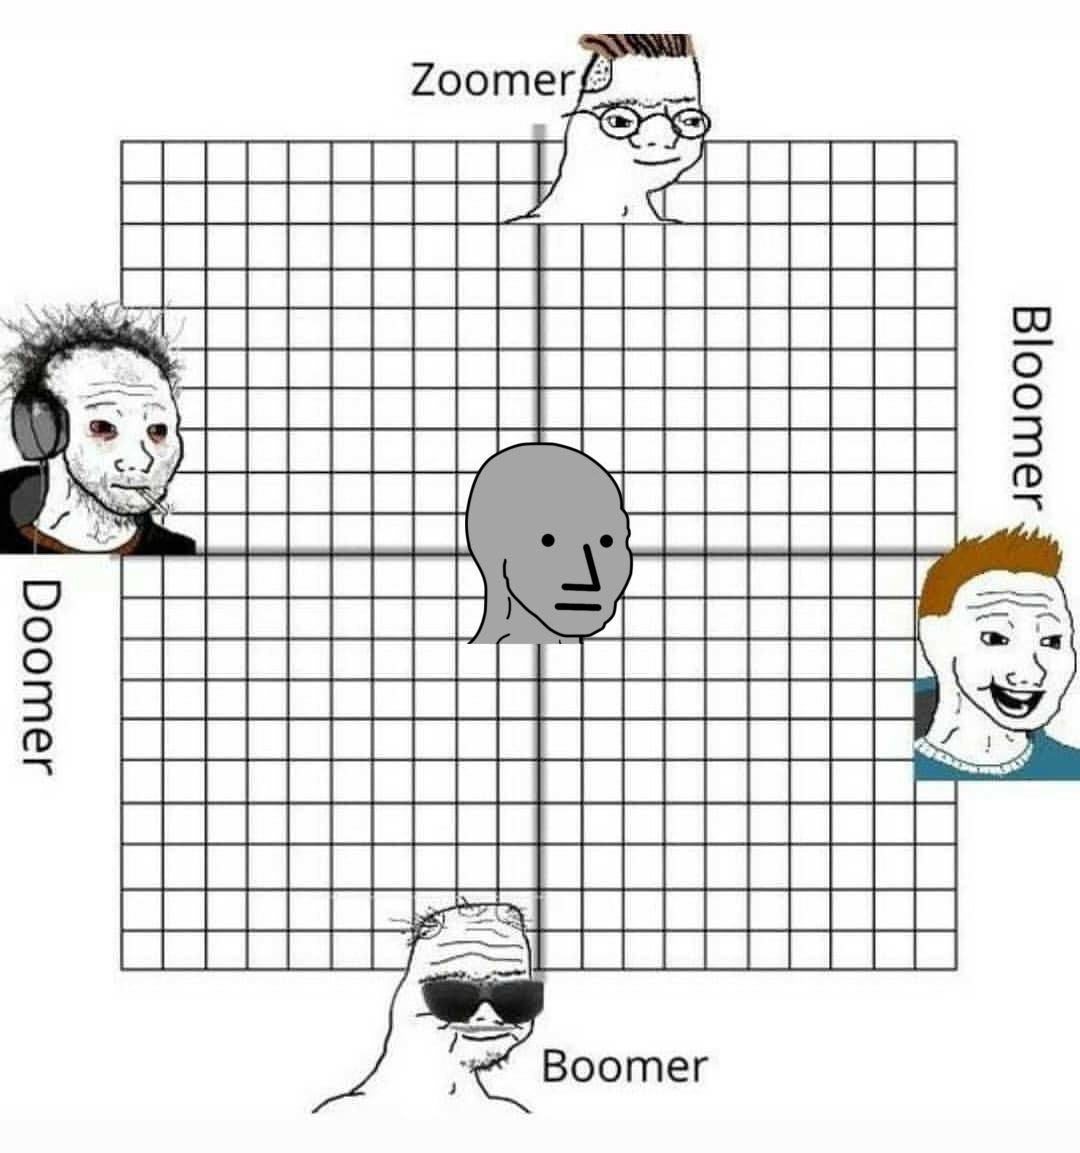 DOOMER, BOOMER, BLOOMER e ZOOMER: memes, internet e lifestyles., by Jose  Mauro Nunes